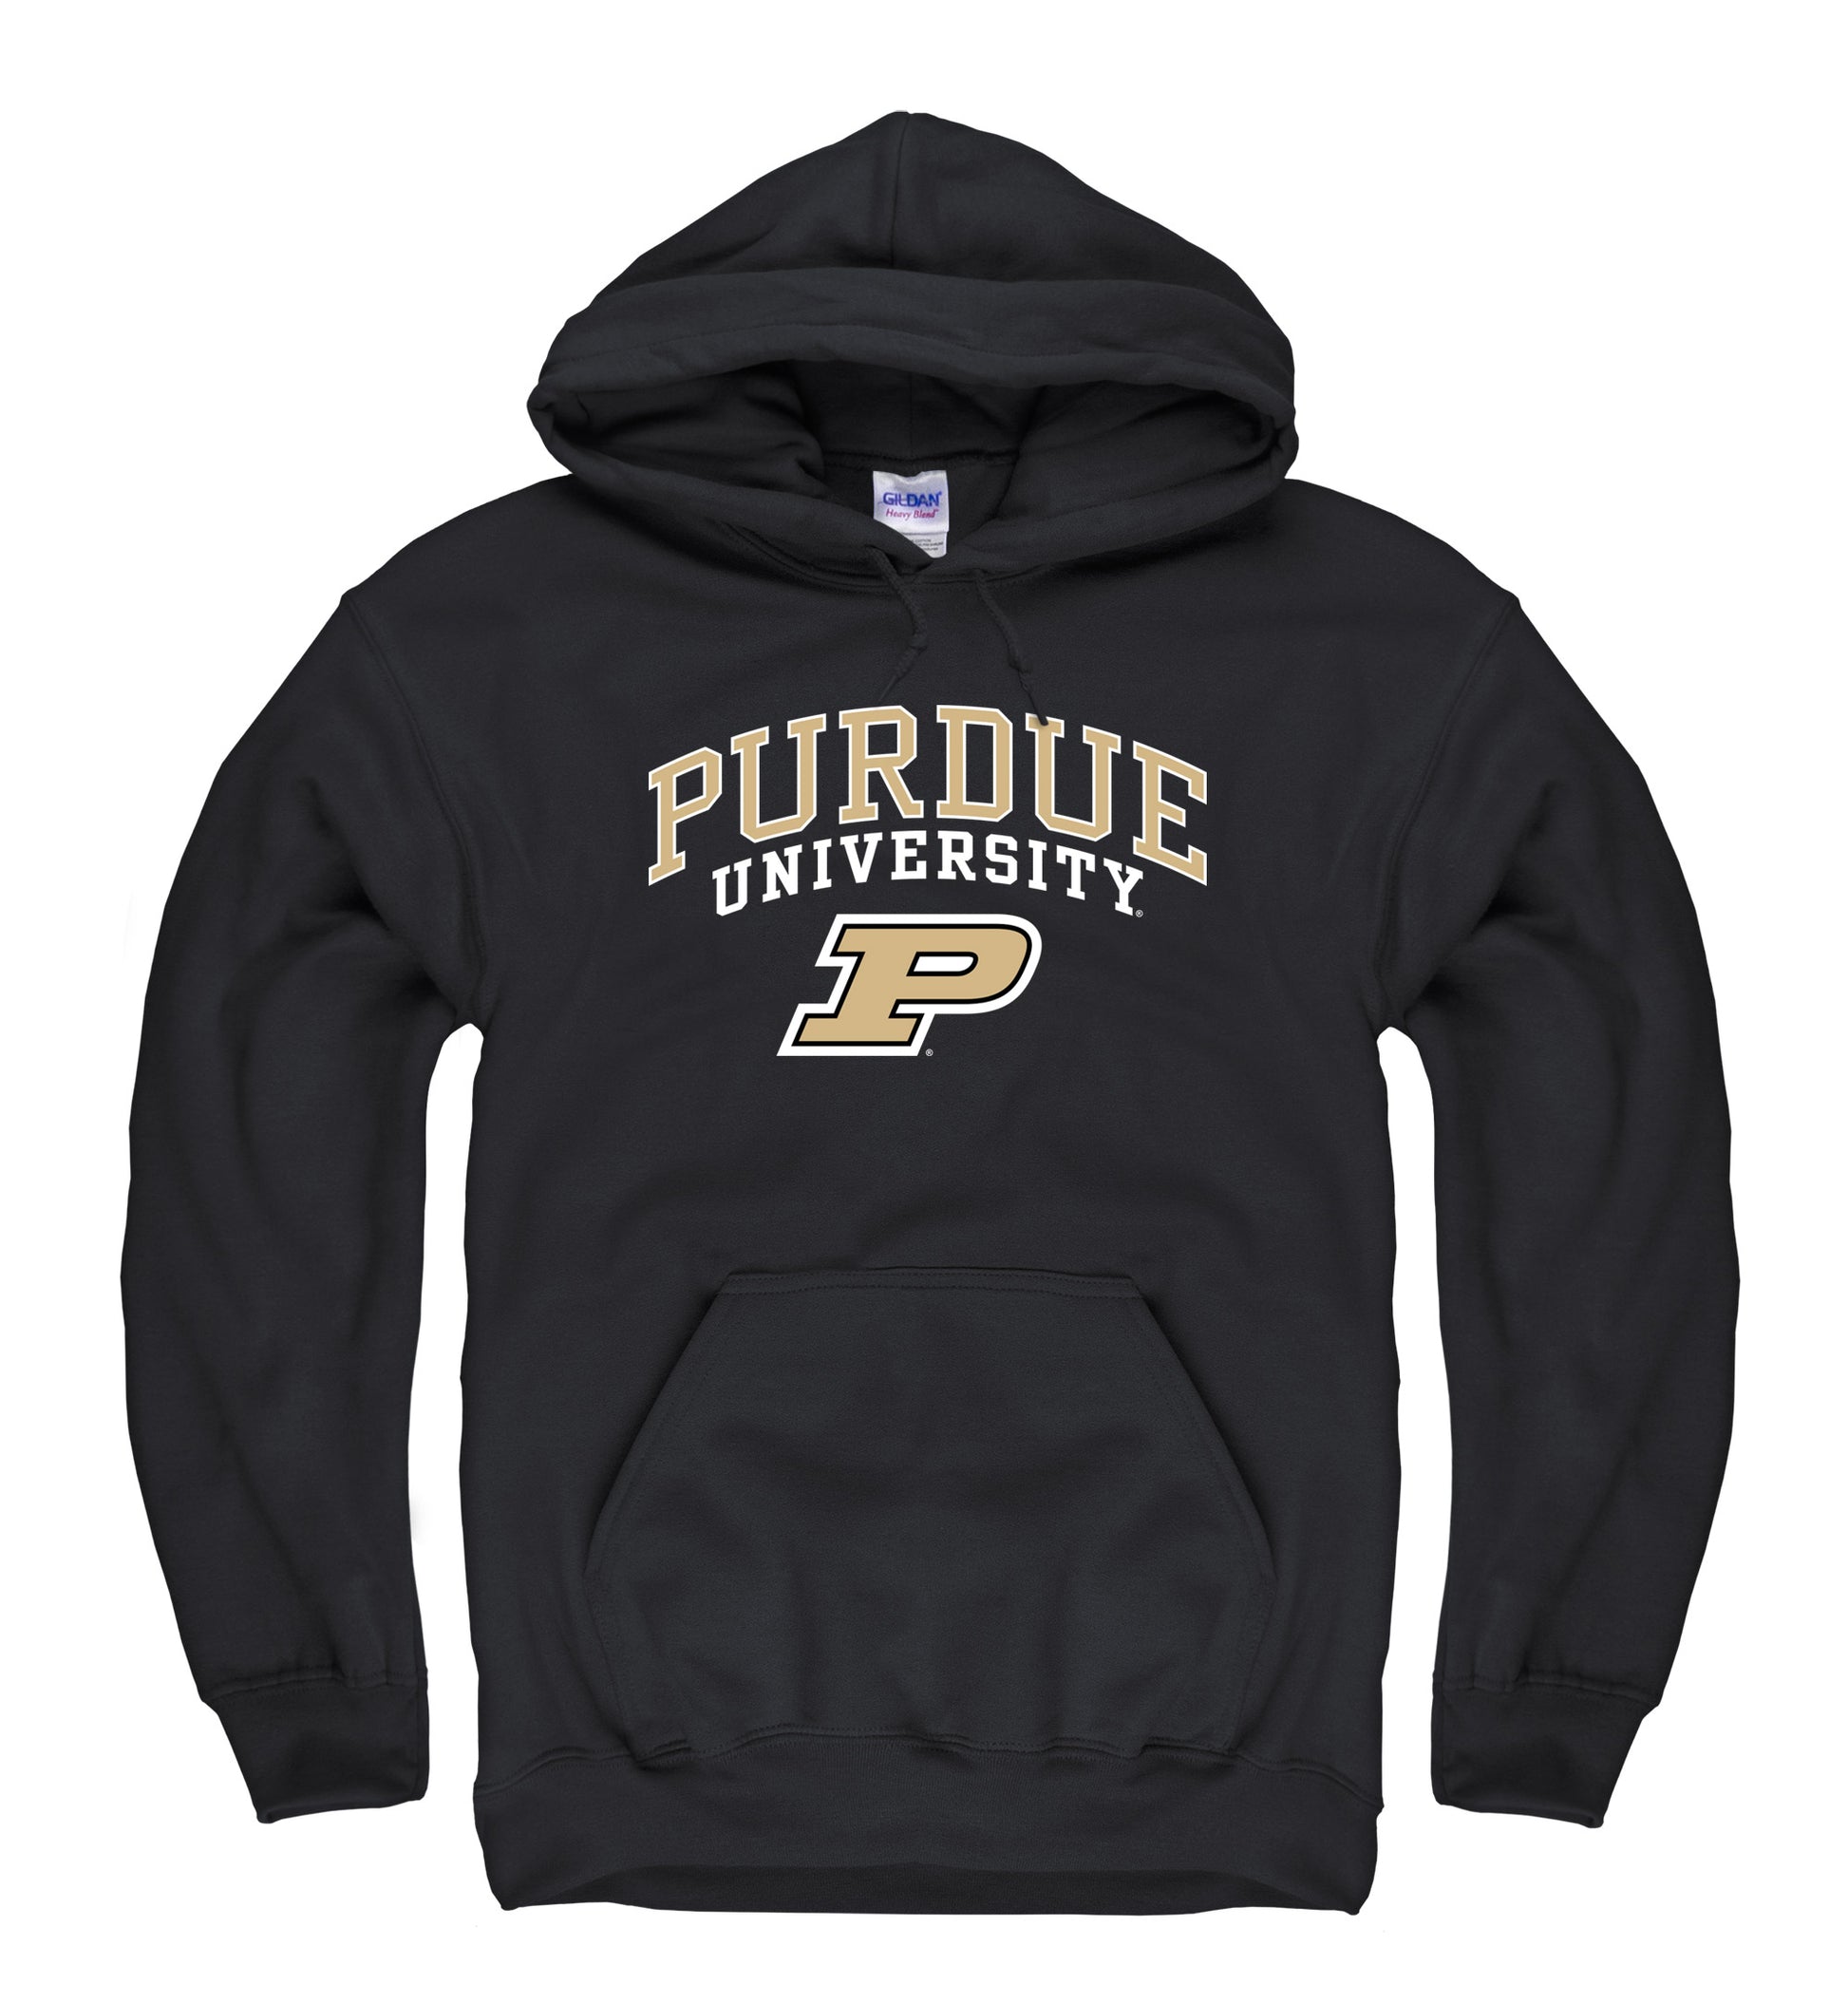 New Agenda officially licensed NCAA Men's Hoodie Sweatshirt-Black-Shop College Wear